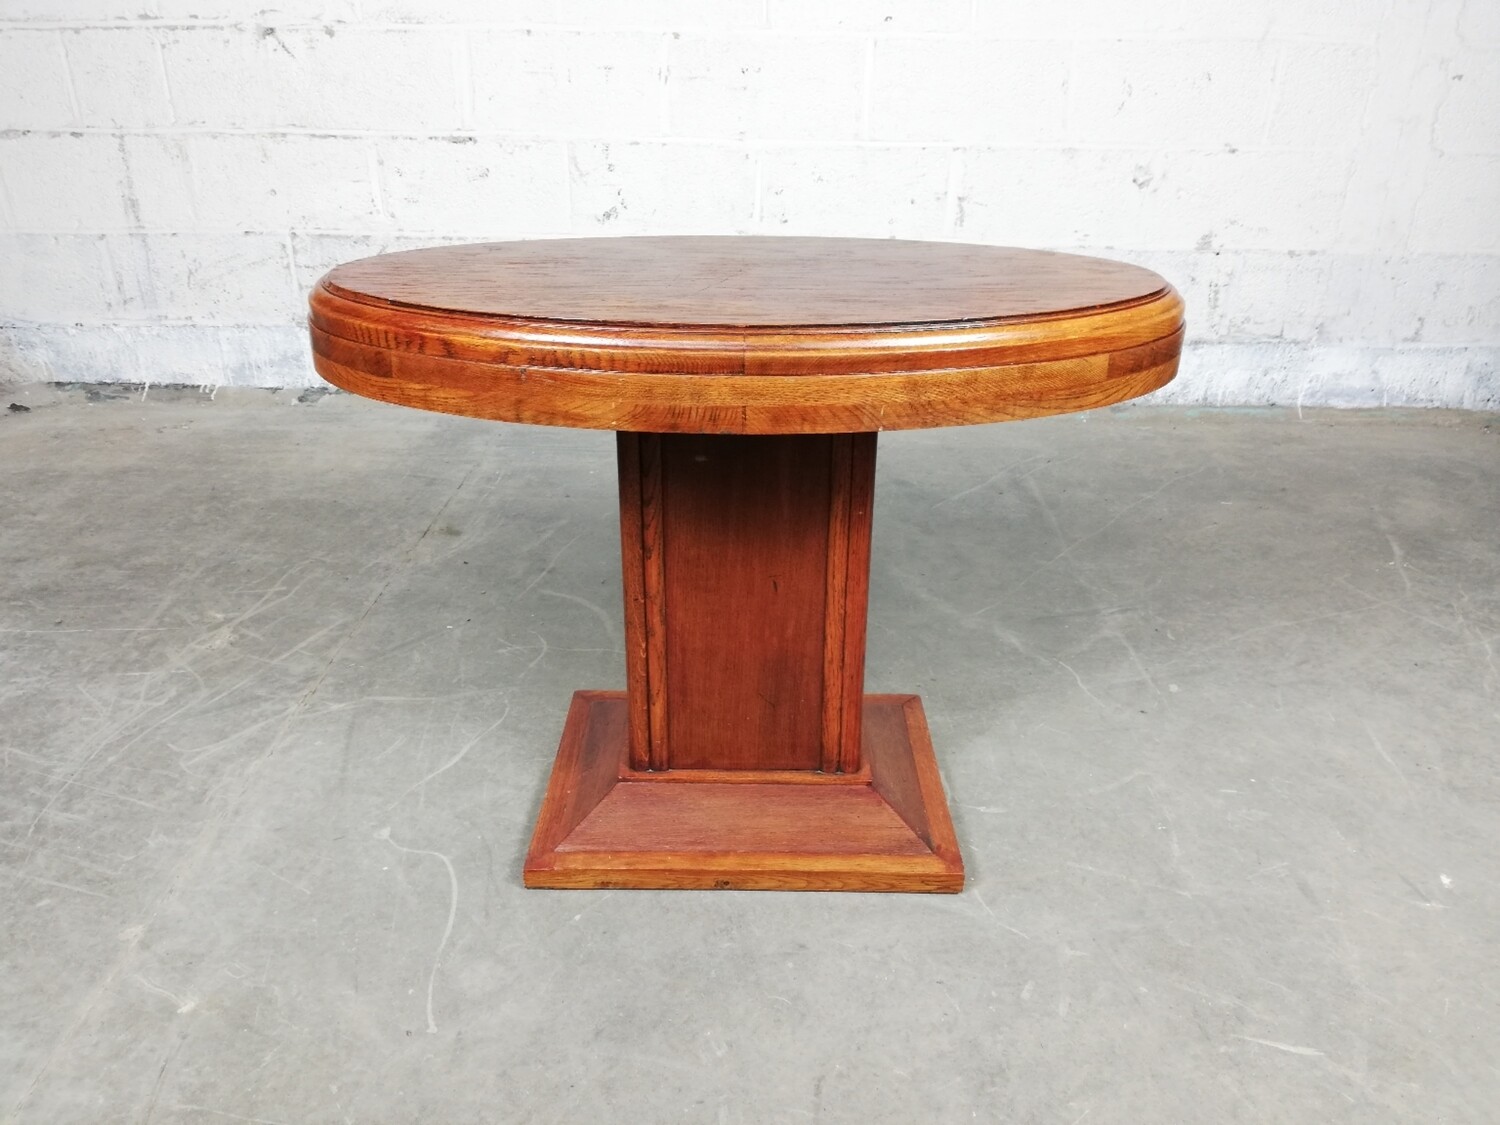 Antiue wooden art deco table